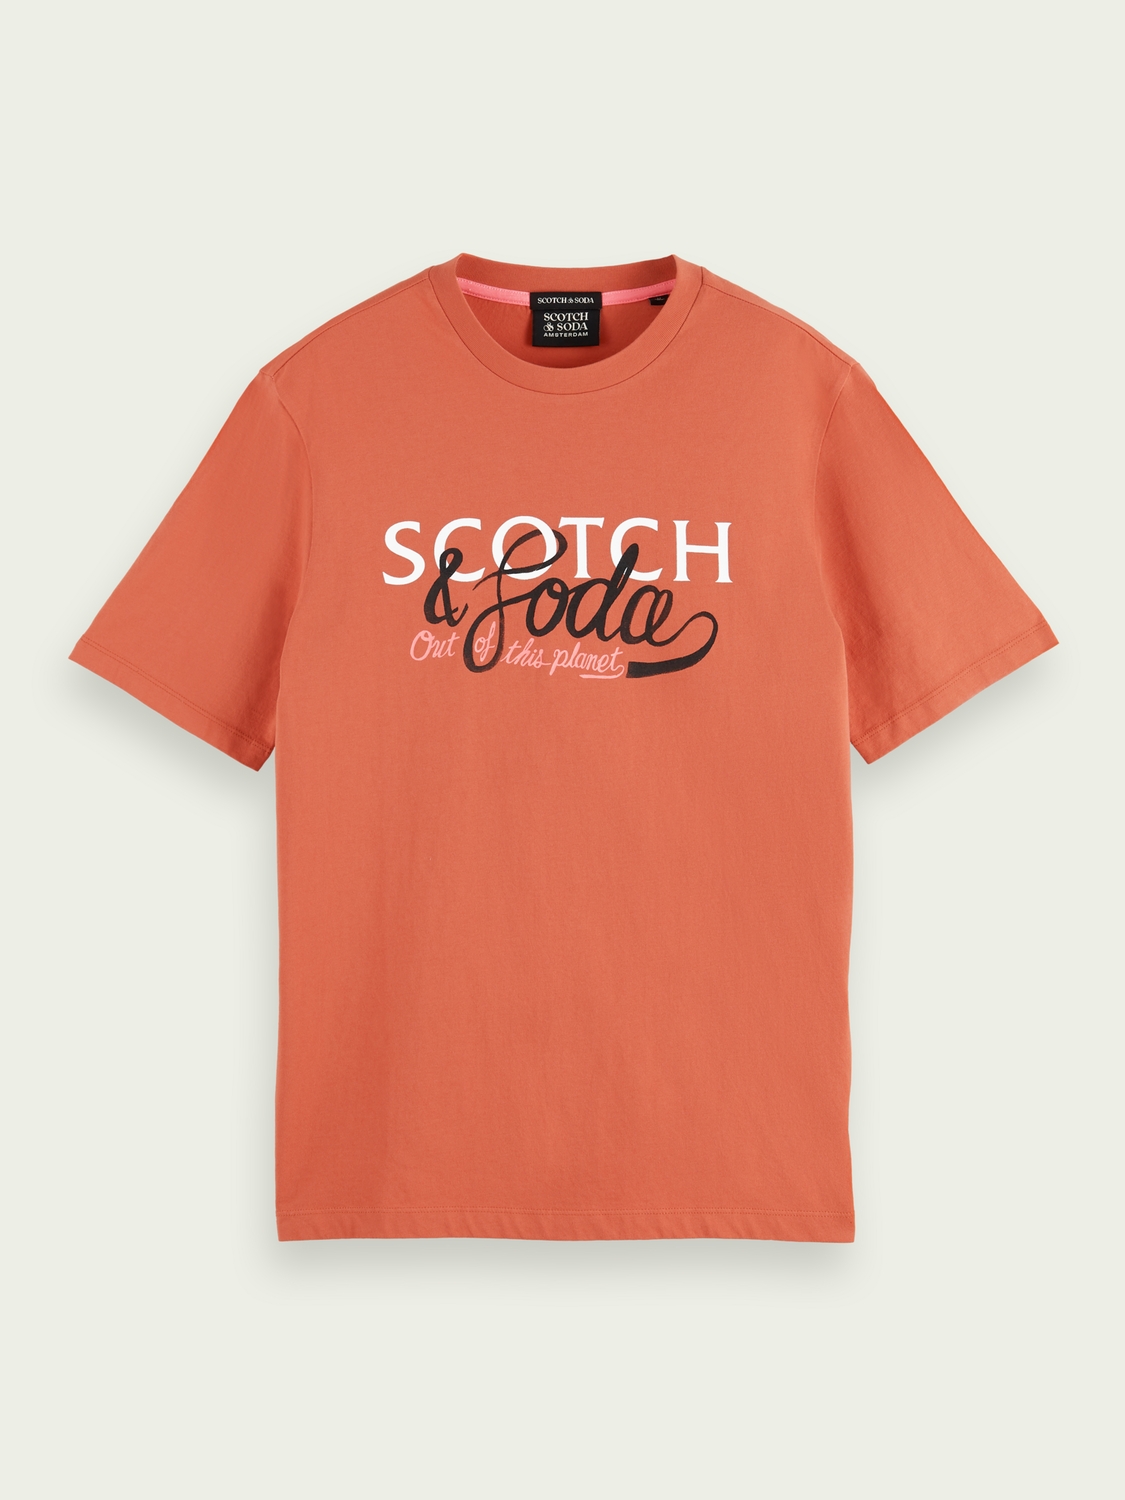 Scotch & Soda - Shirt